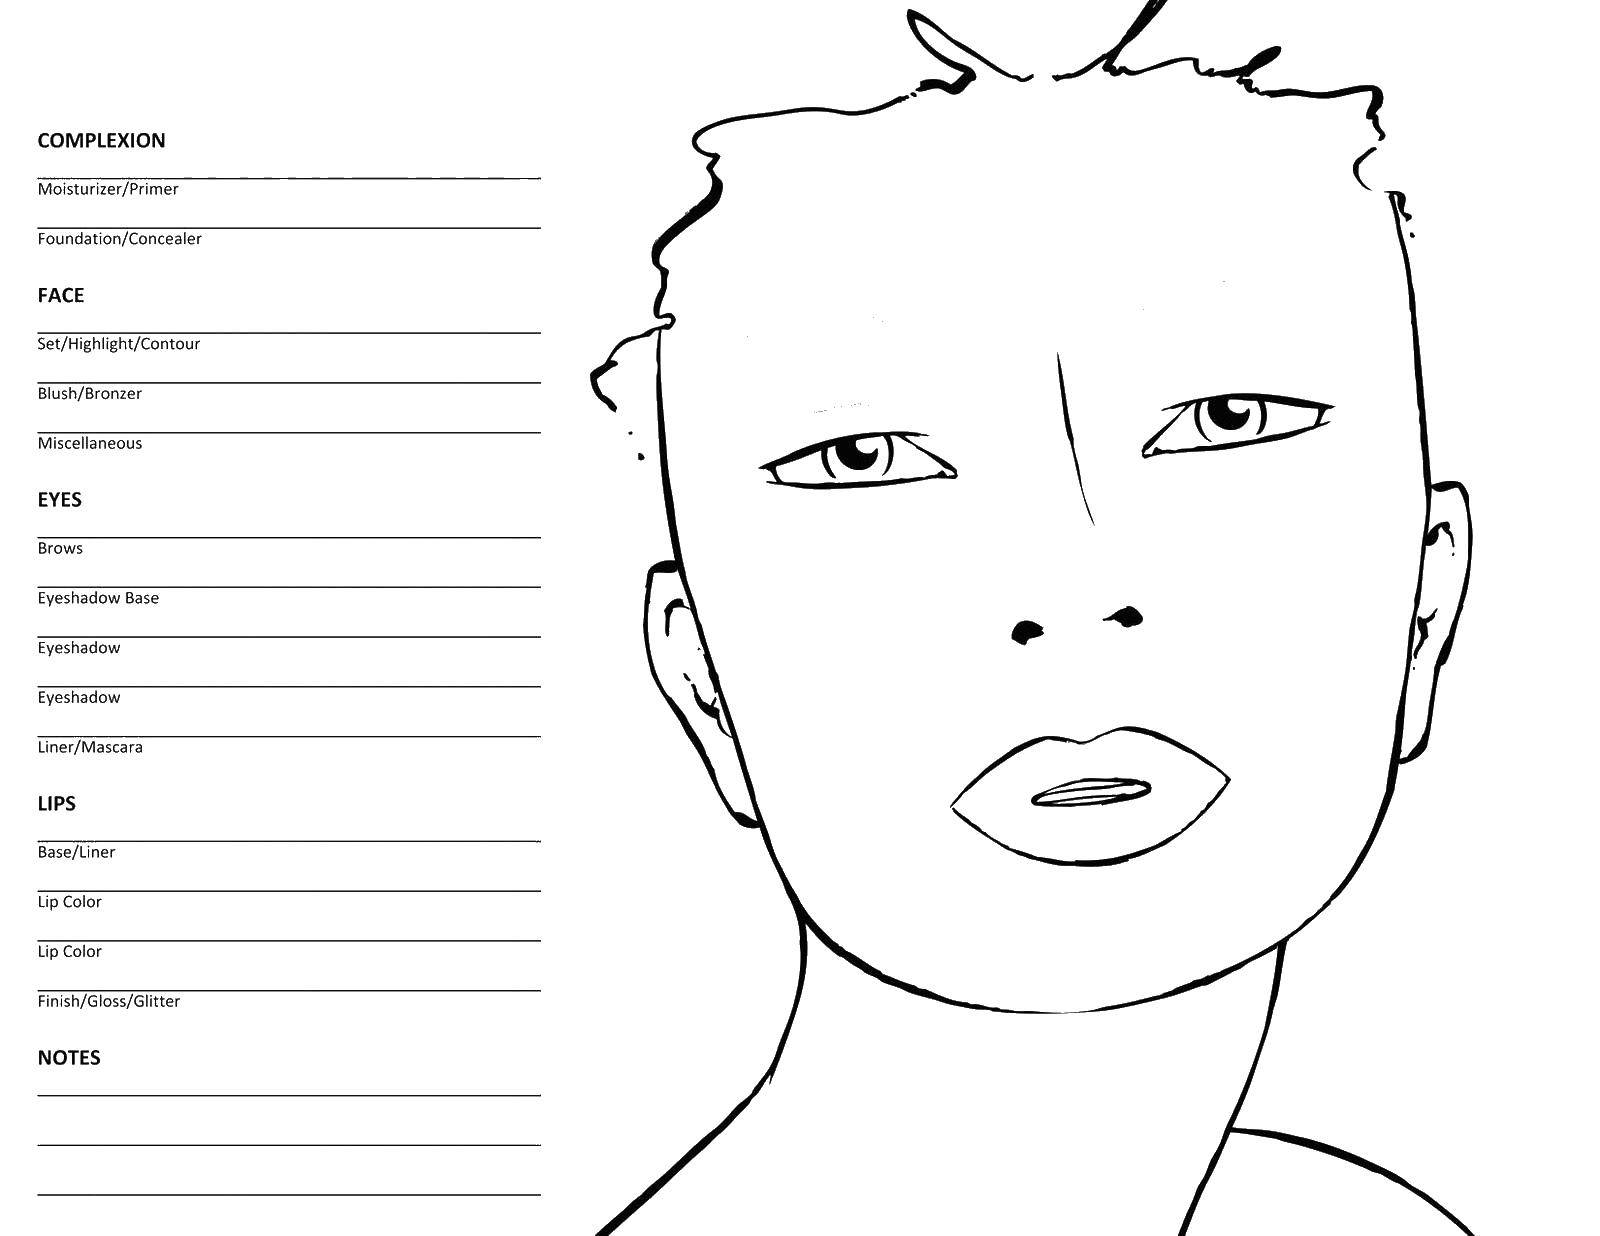 Coloring Head. Category Makeup. Tags:  head shape, lips.